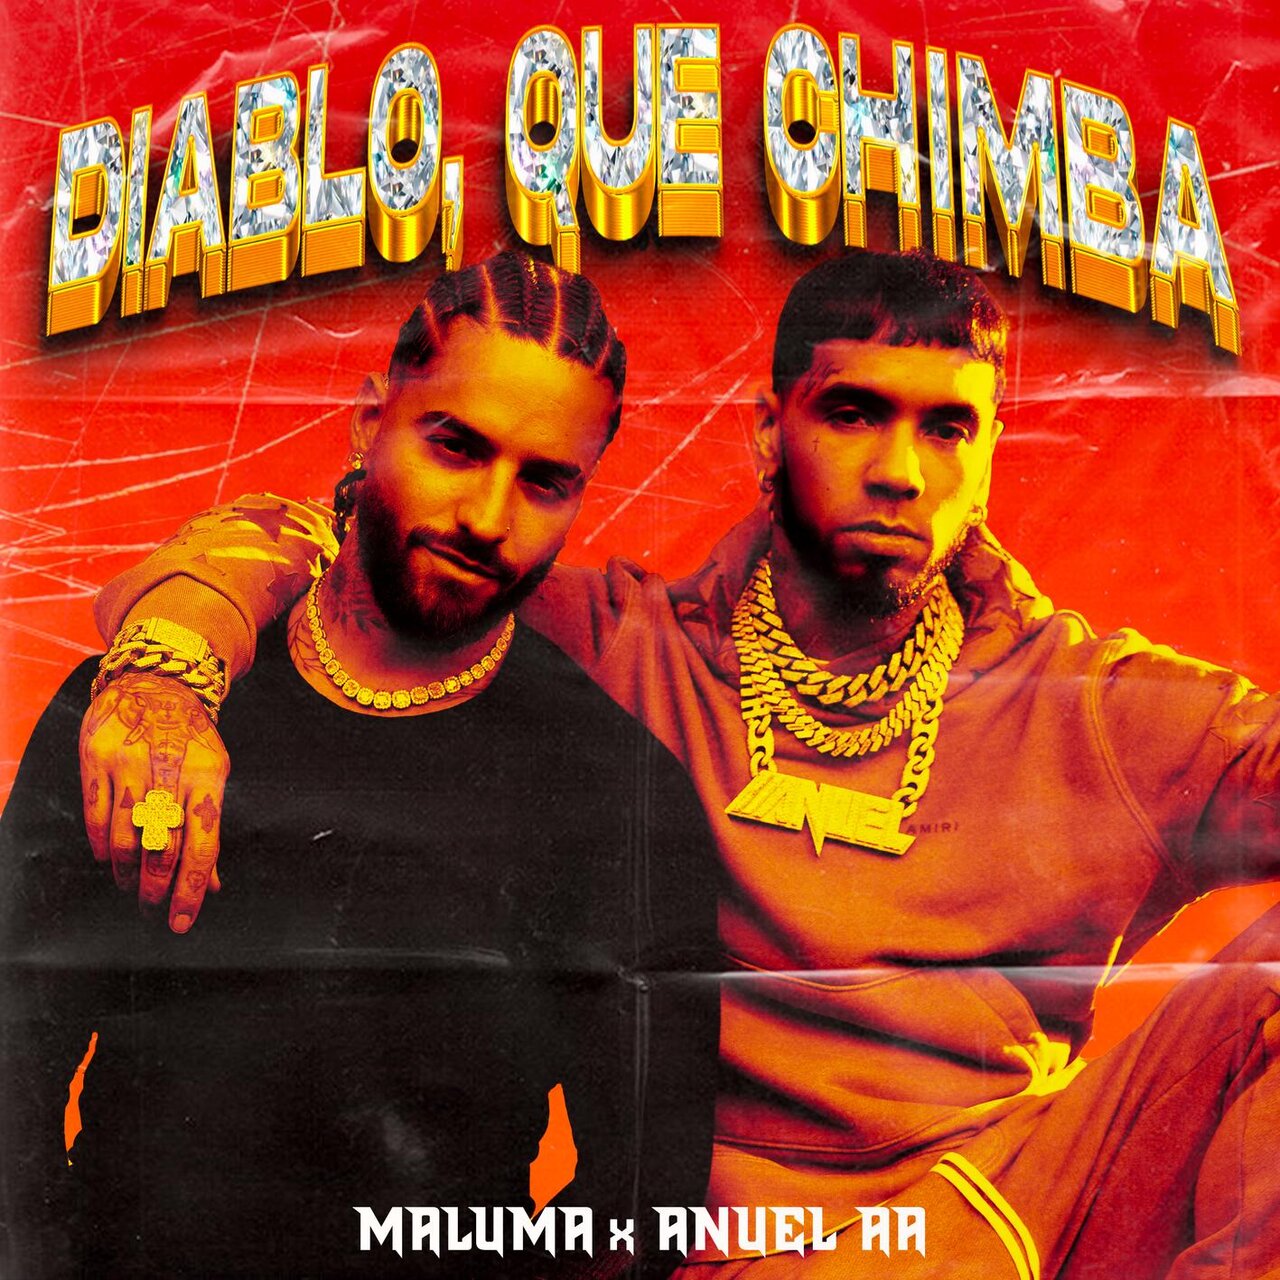 Maluma - Diablo, Qué Chimba (ft. Anuel AA) (Cover)